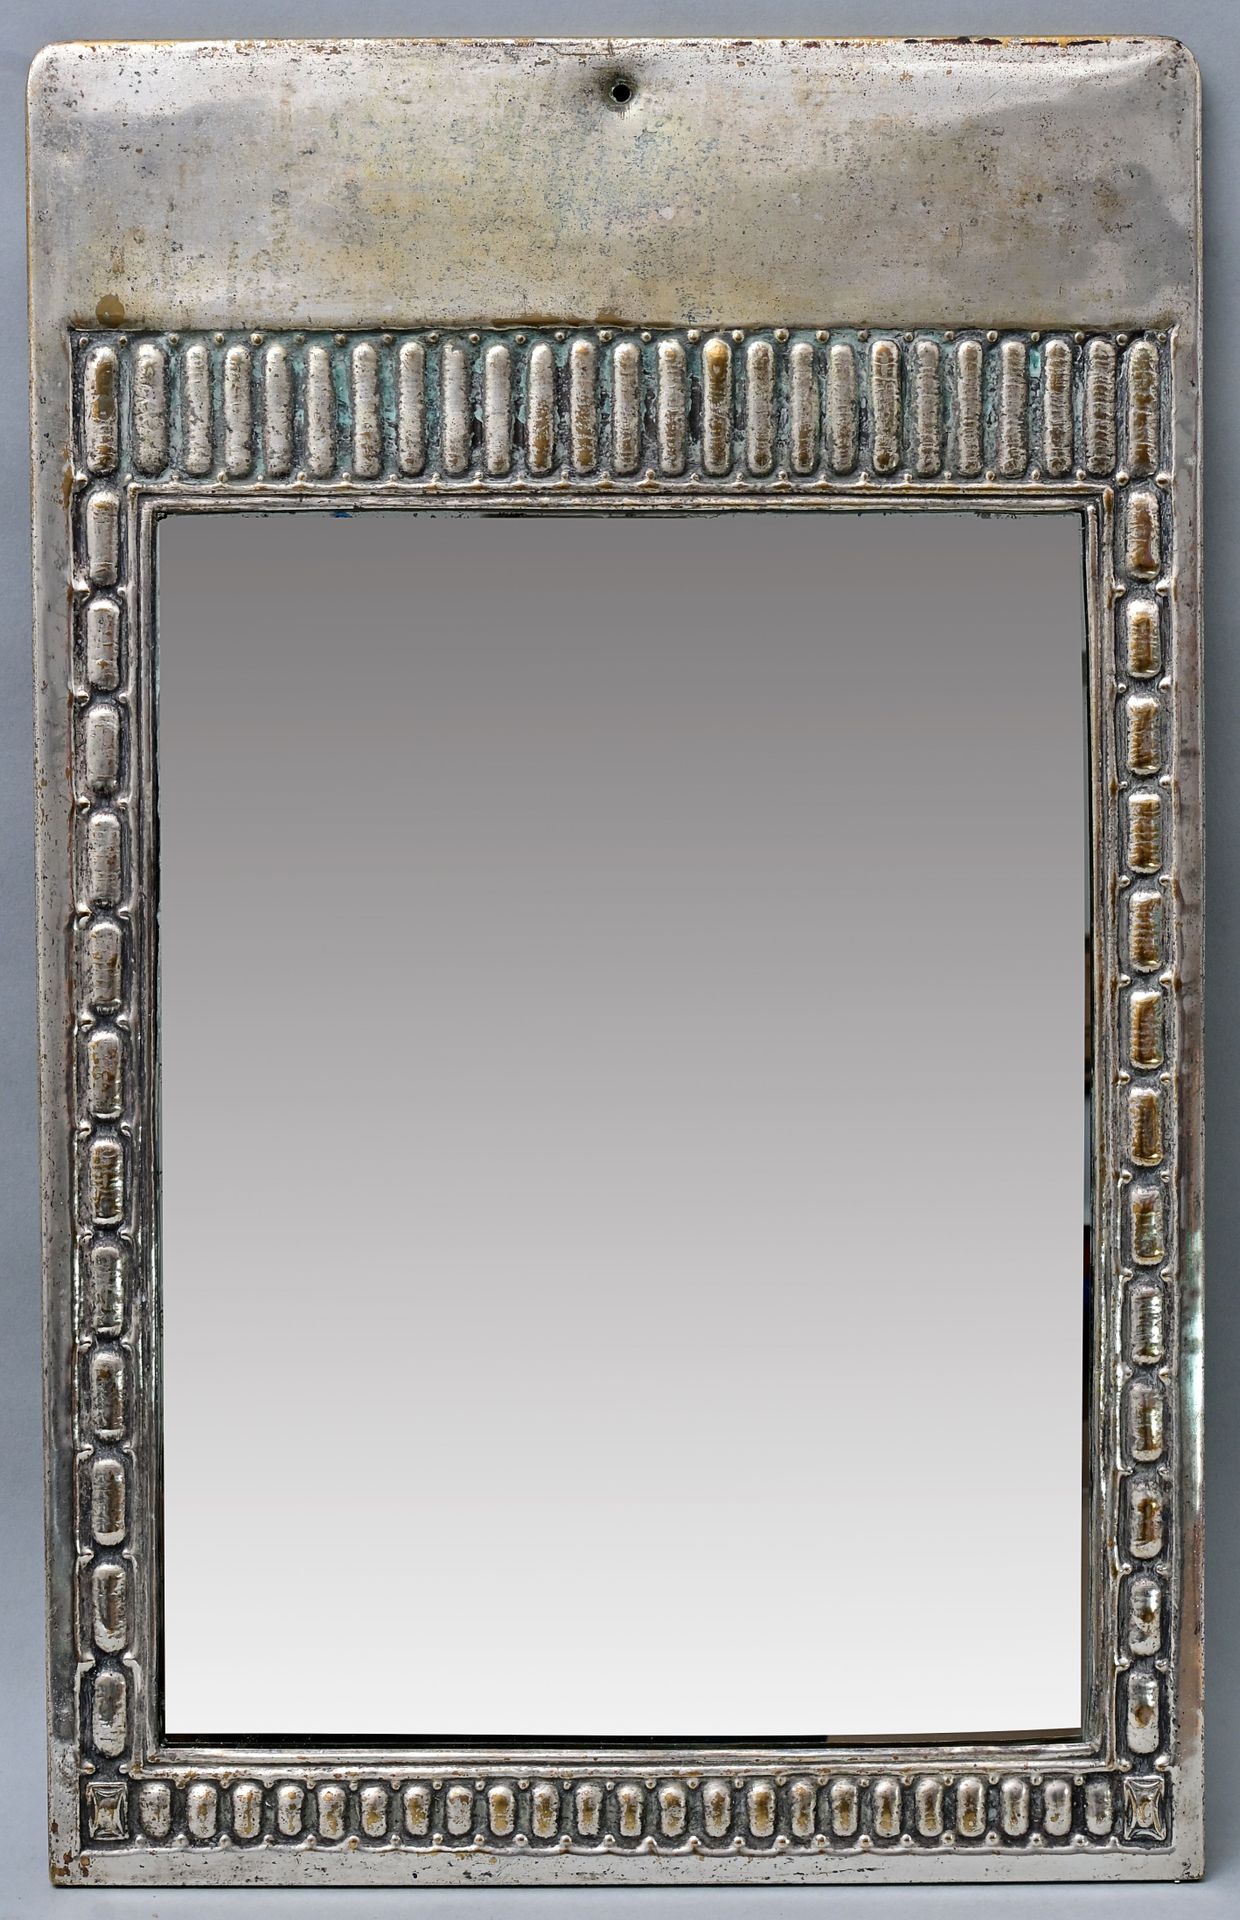 Null 优雅的新艺术派镜子，金属框架，镀银，约1910年。 长方形格式，周围有气泡的装饰边缘，角落里有小装饰品。61 x 39厘米。镀银擦伤。清洁剂的残留物。&hellip;